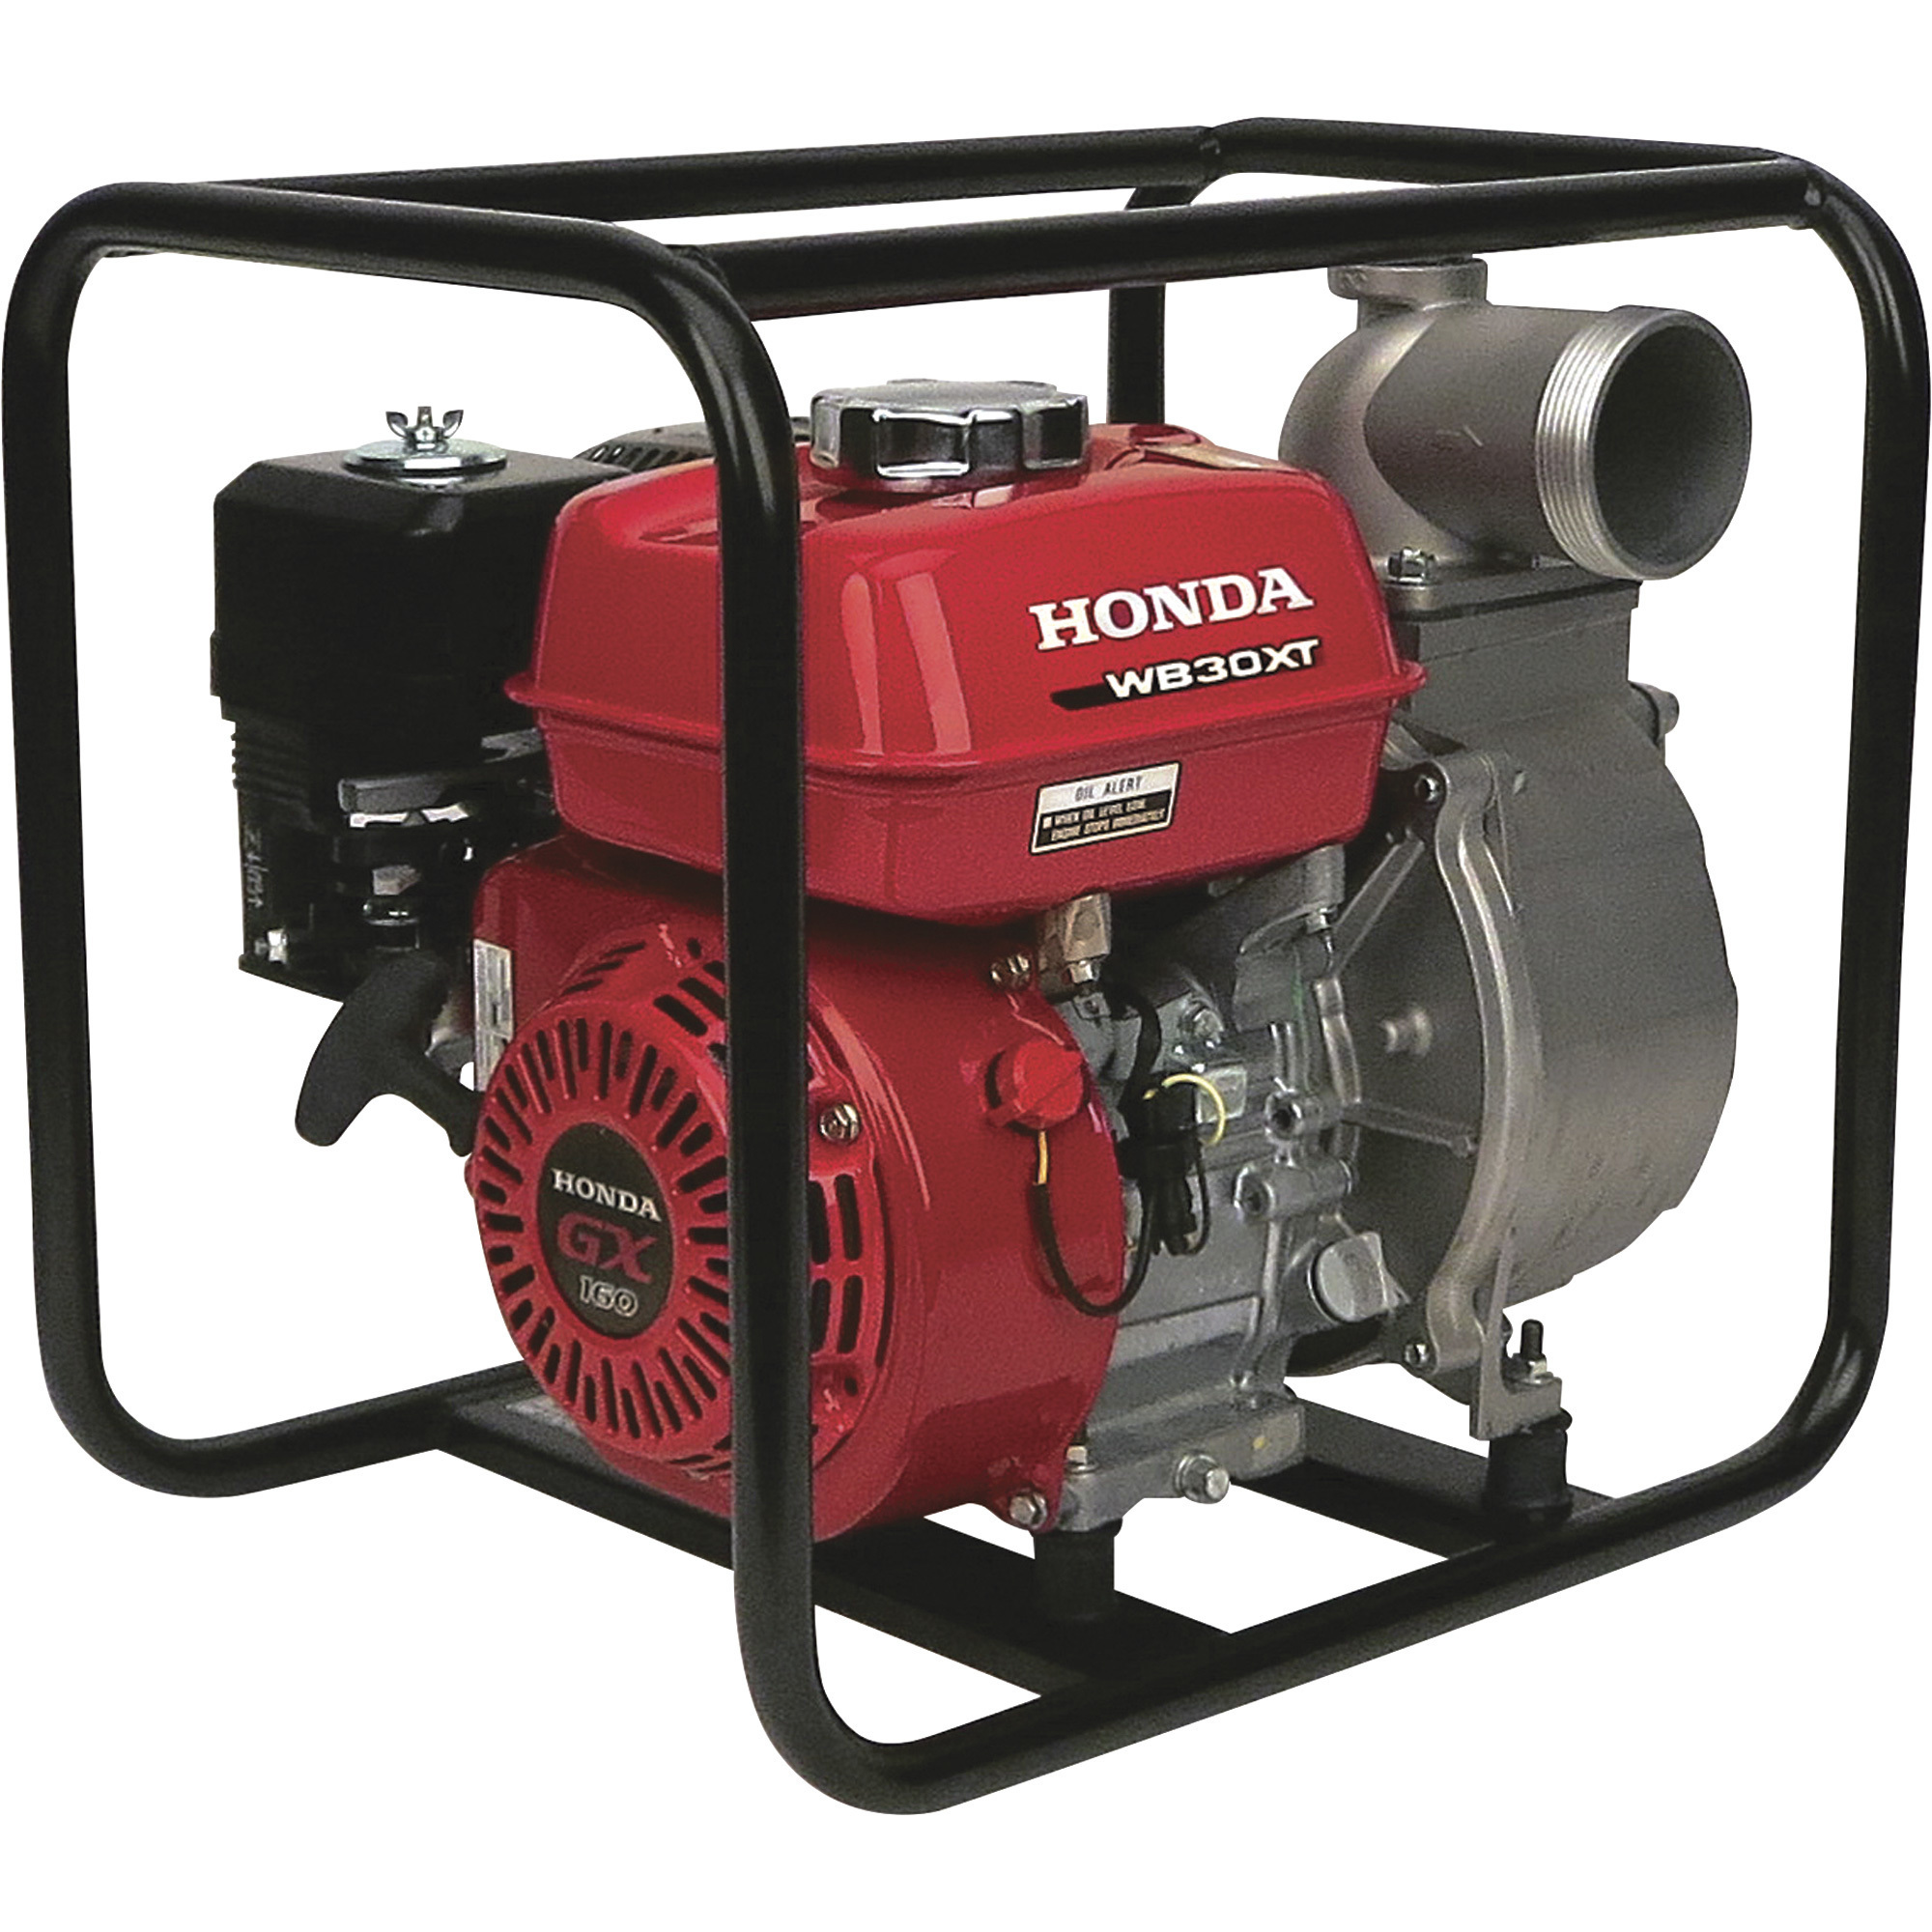 Honda Self-Priming Water Pump, 17,400 GPH, 3Inch Ports, 160cc Honda GX160 Engine, Model WB30XK2